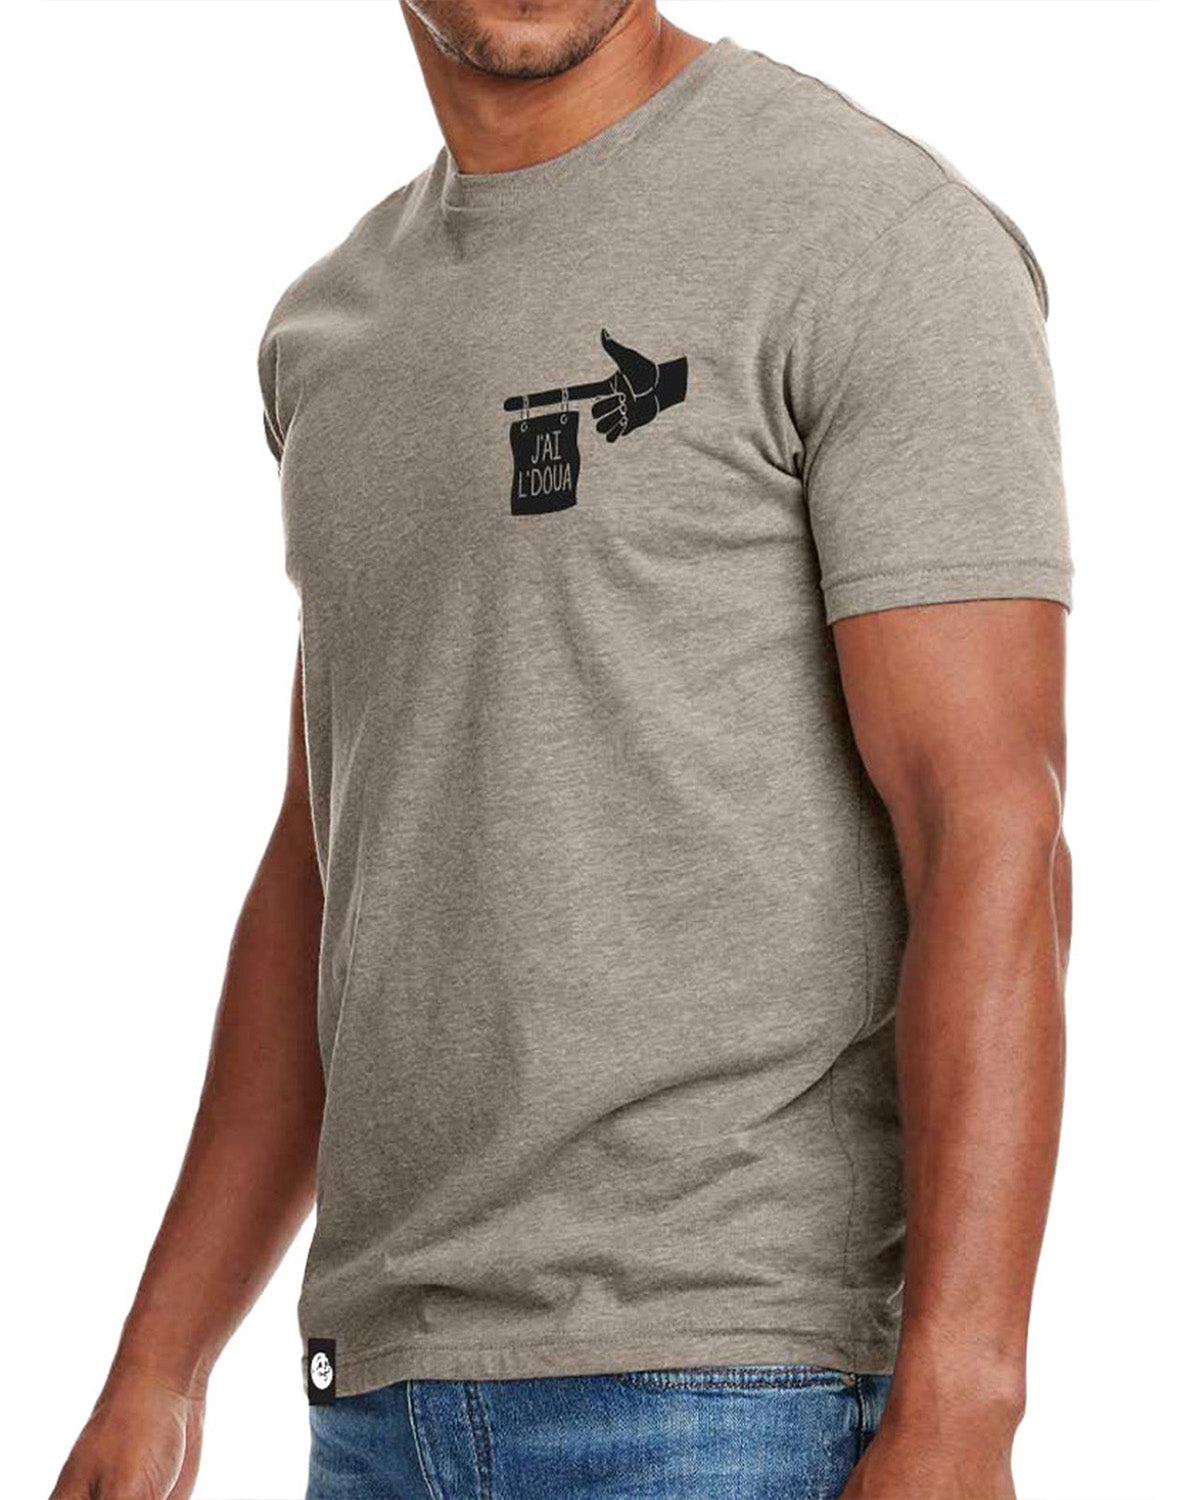 T-shirt Phoque Apparel gris «J'ai l'doua»